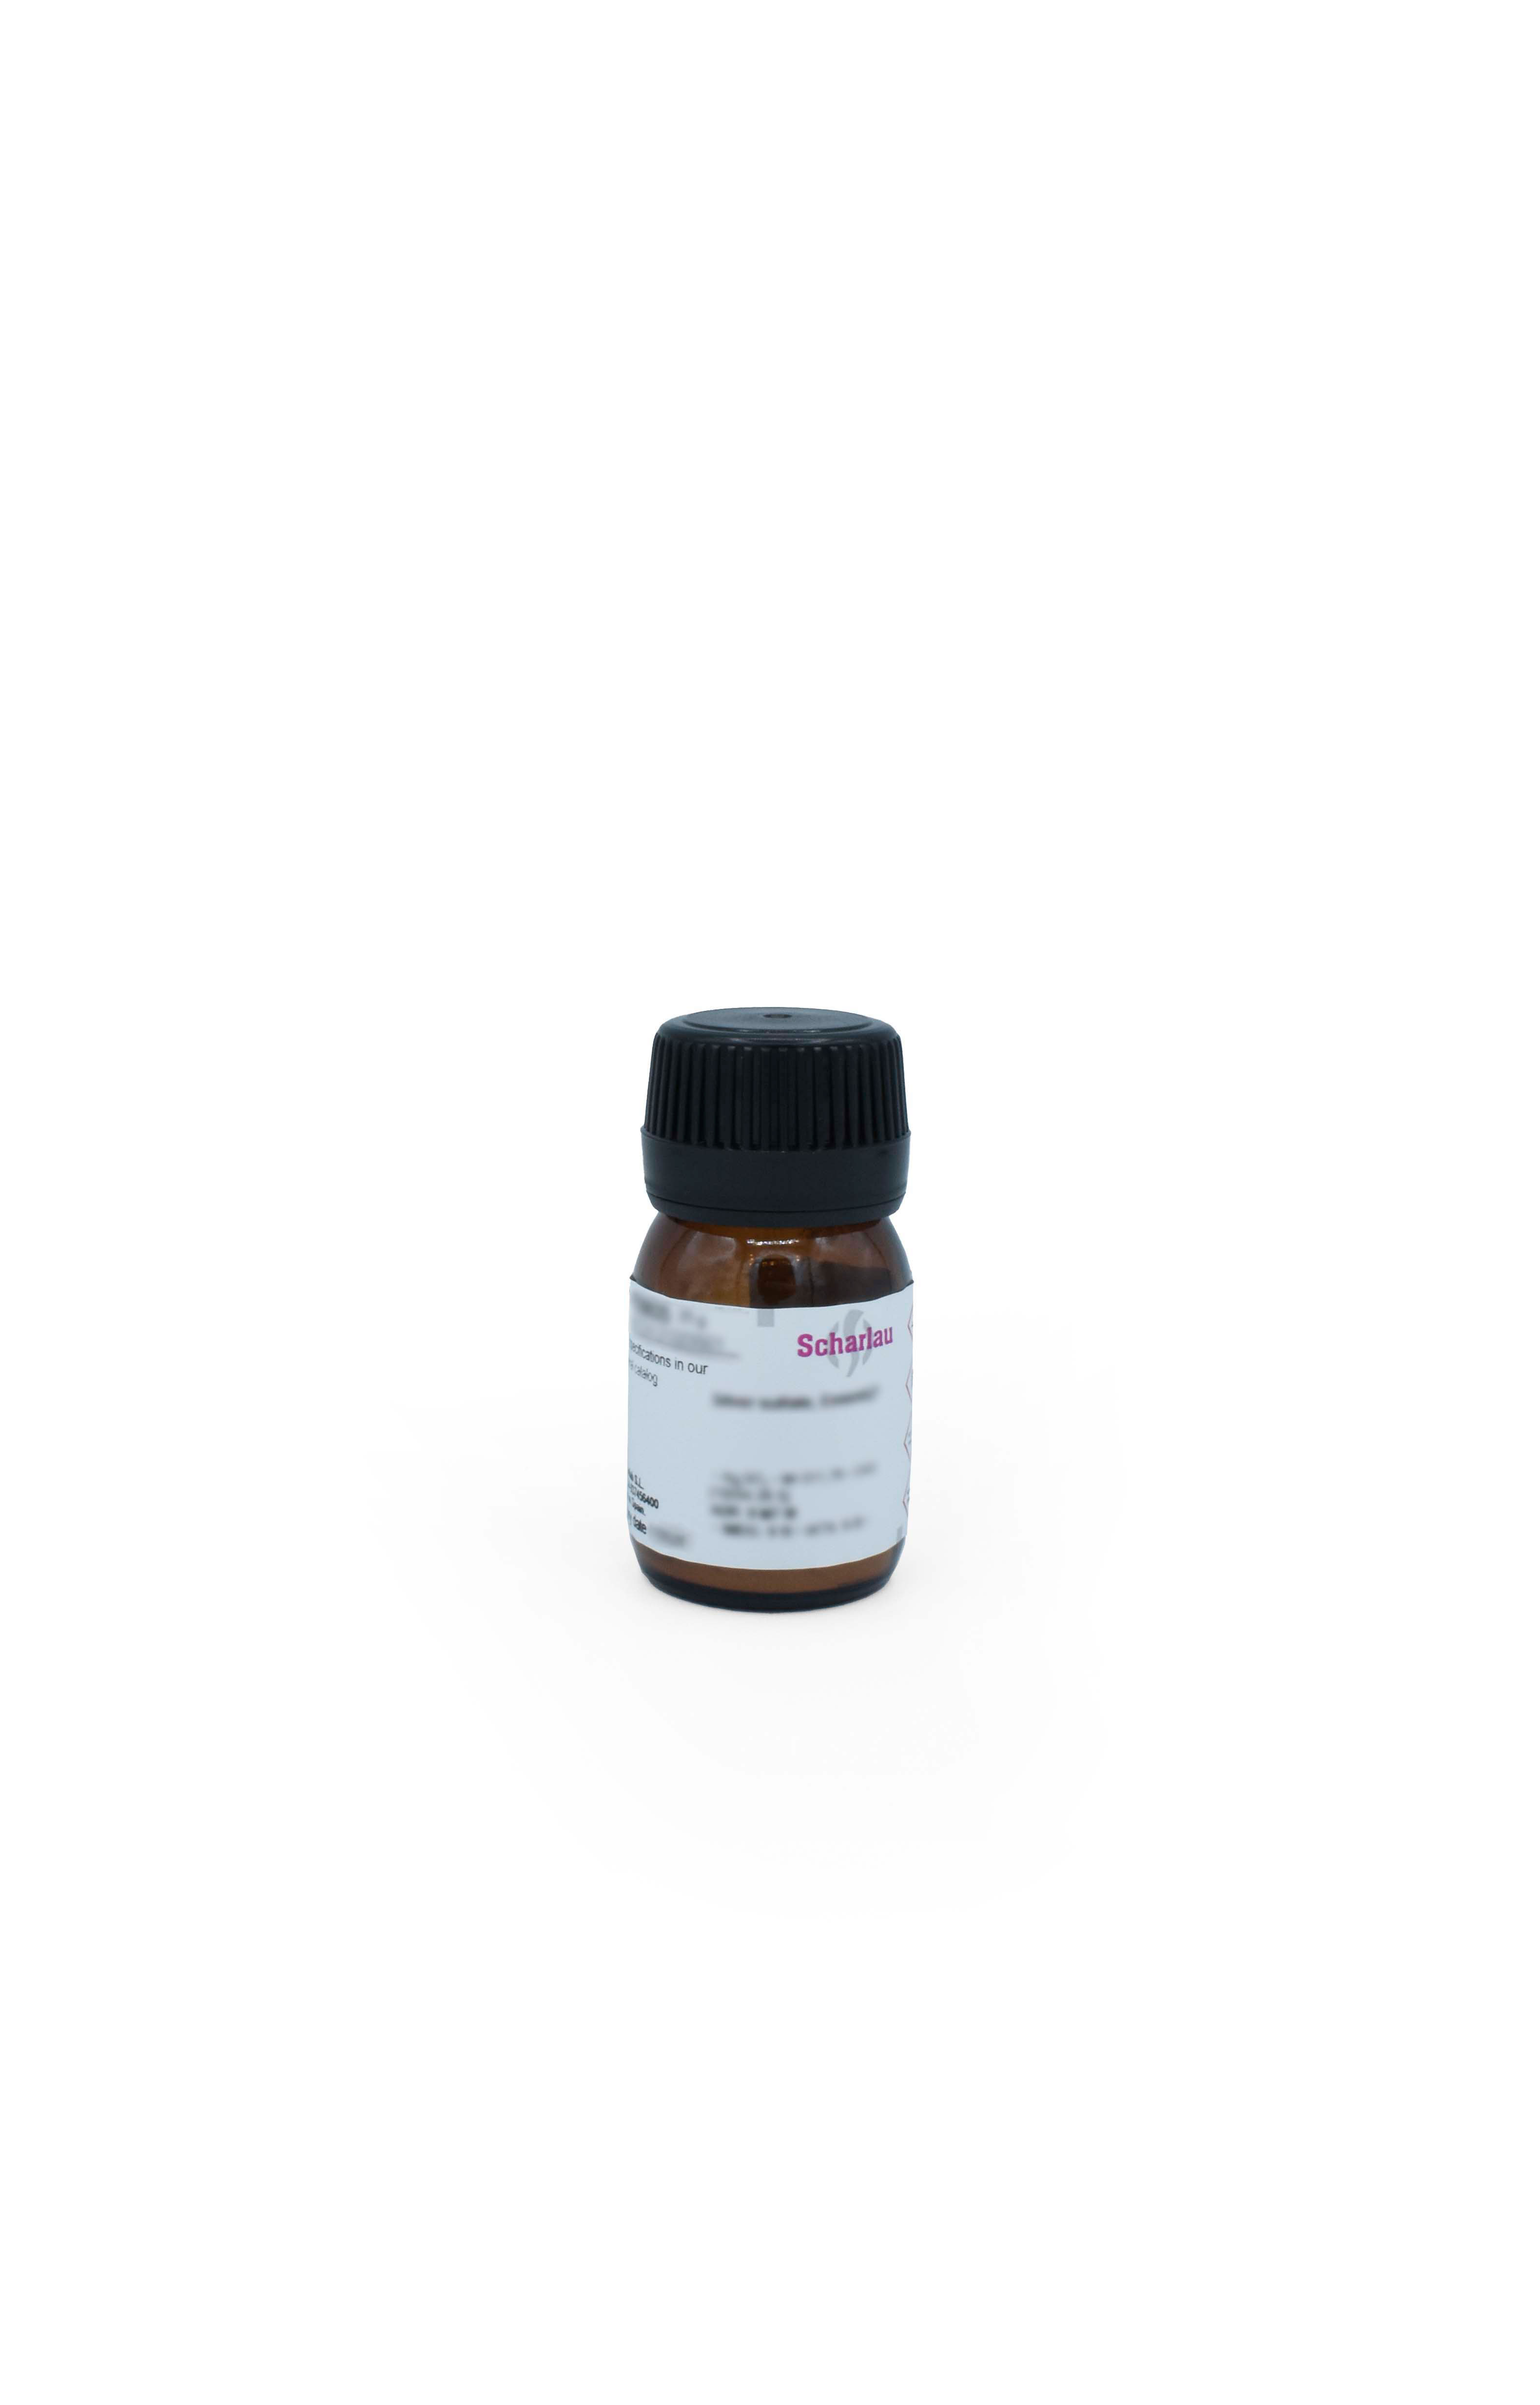 Índigo-carmín, C.I. 73015, purísimo, Reag. Ph Eur, Ácido Indigo-5,5’-disulfónico, sal disódica; Azul ácido 74